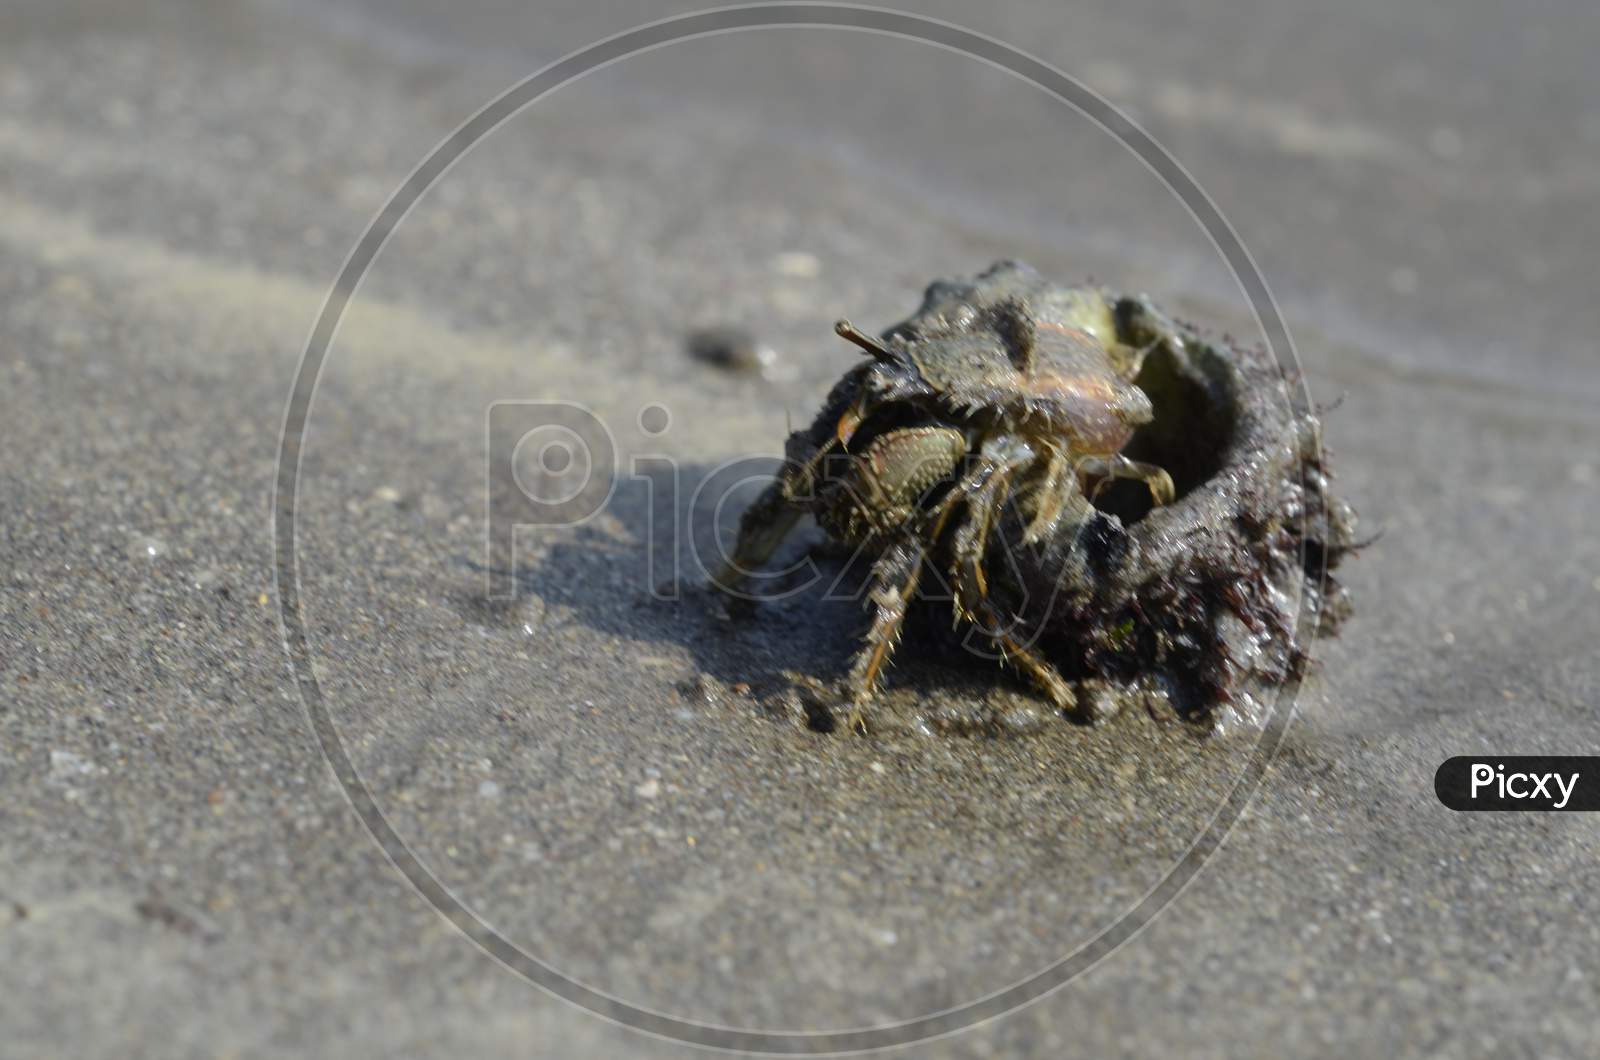 A crab on the beach